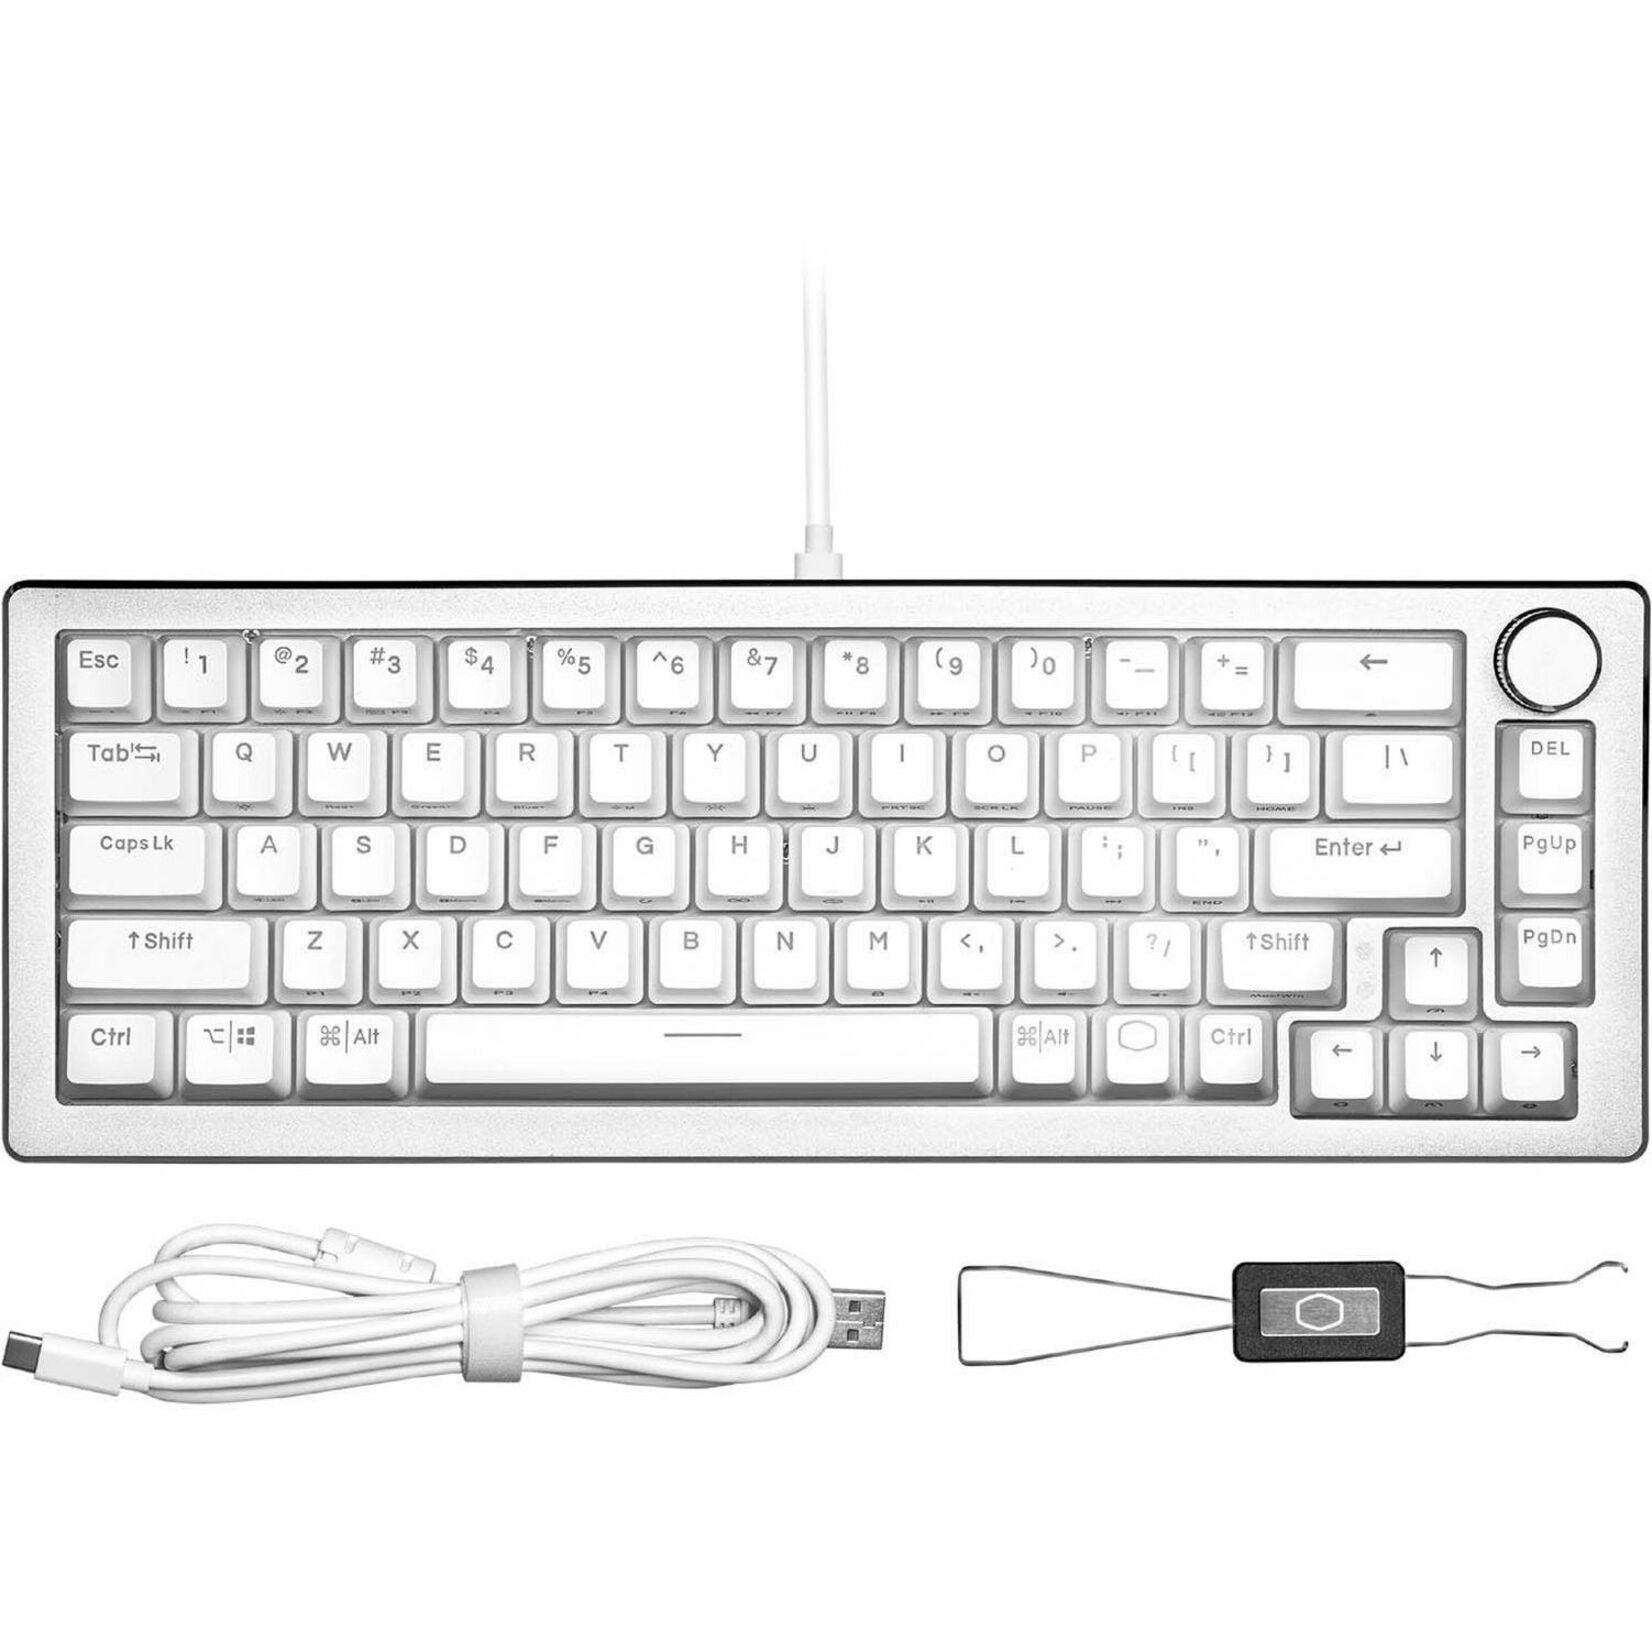 Cooler Master CK-720-SKKR1-US CK720 65% Gaming Keyboard, RGB LED Backlight, Precision Dial, Detachable Cable